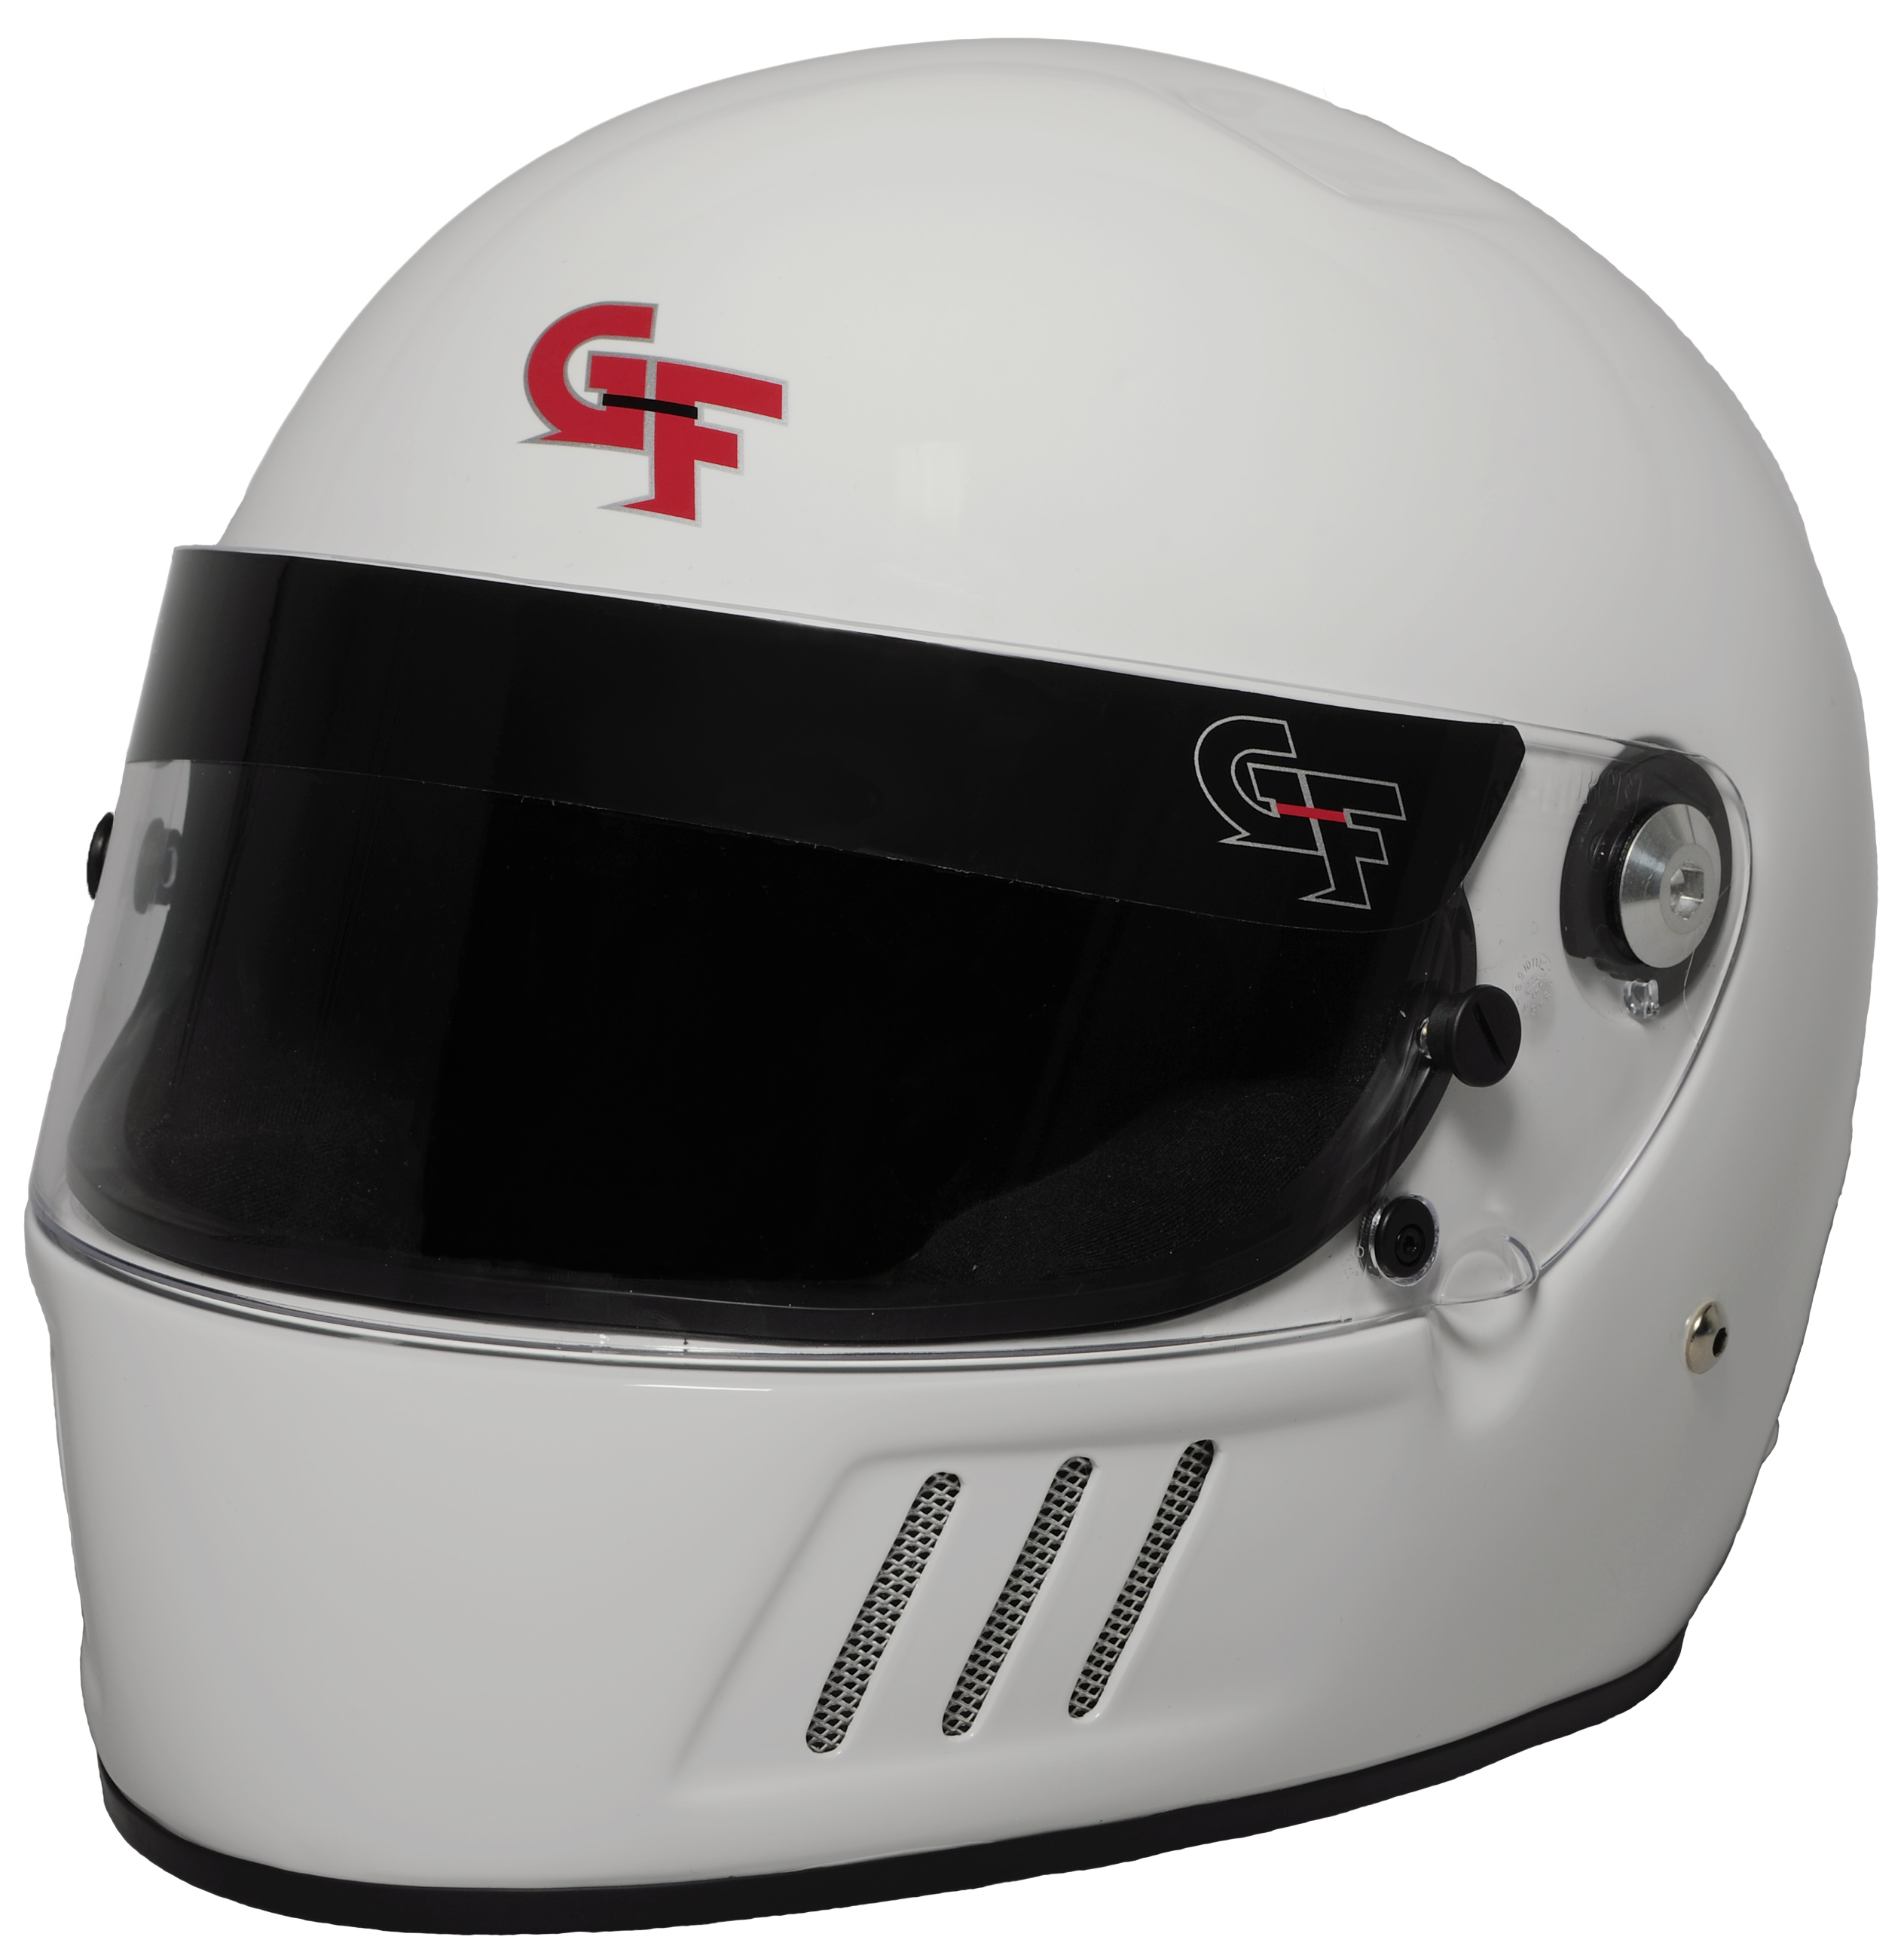 G-Force Racing Gear Helmet, GF3 FULL FACE LRG WHITE SA2015